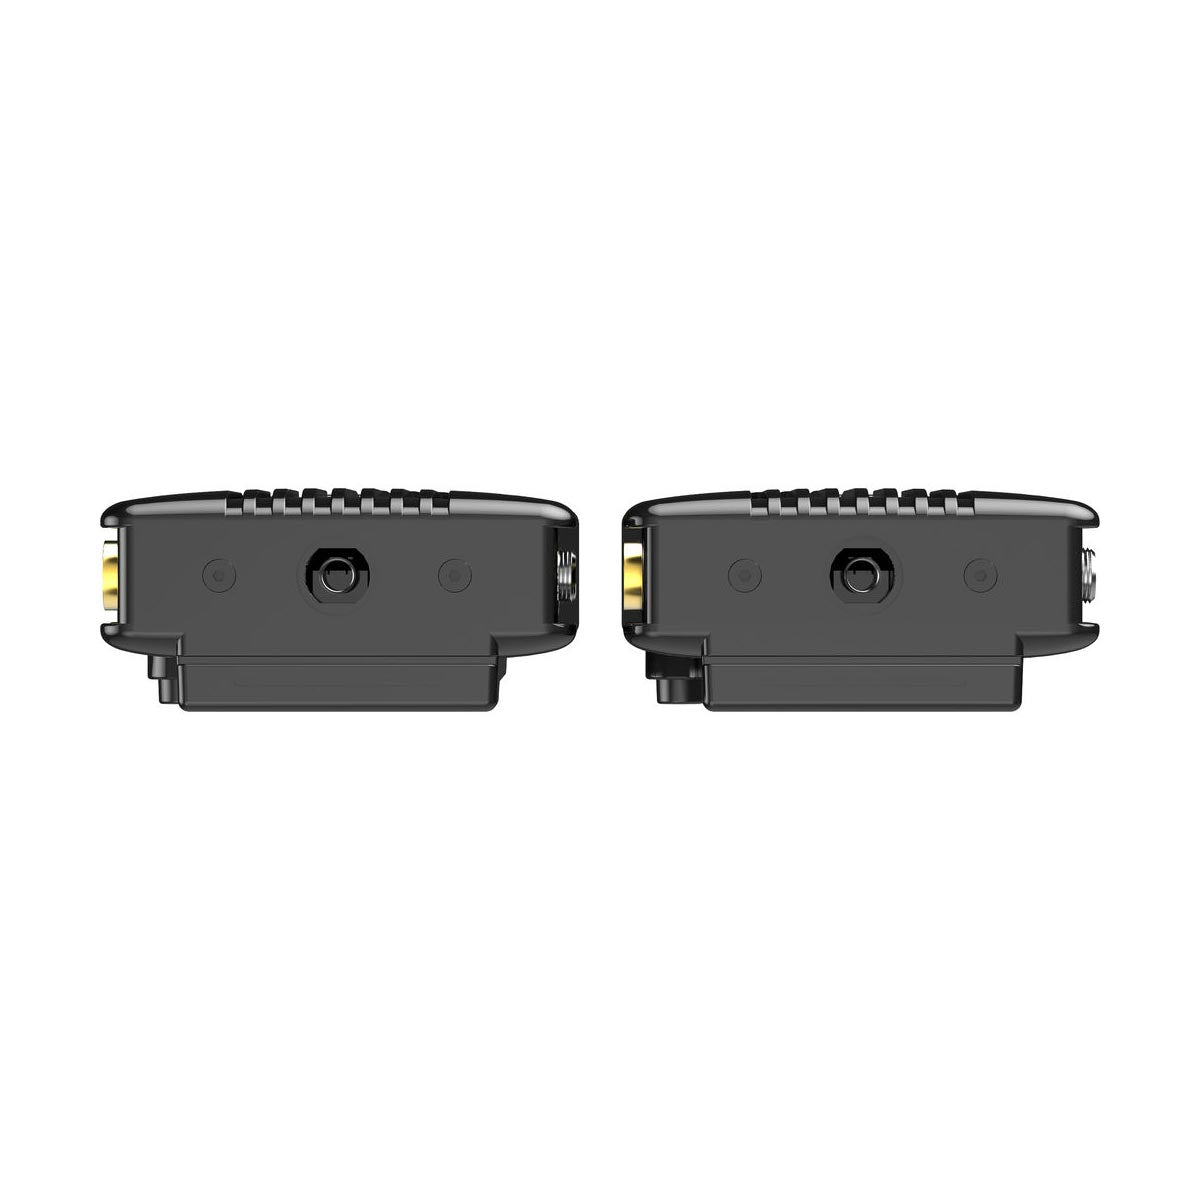 Hollyland Mars 400s SDI/HDMI Wireless Video Transmission System